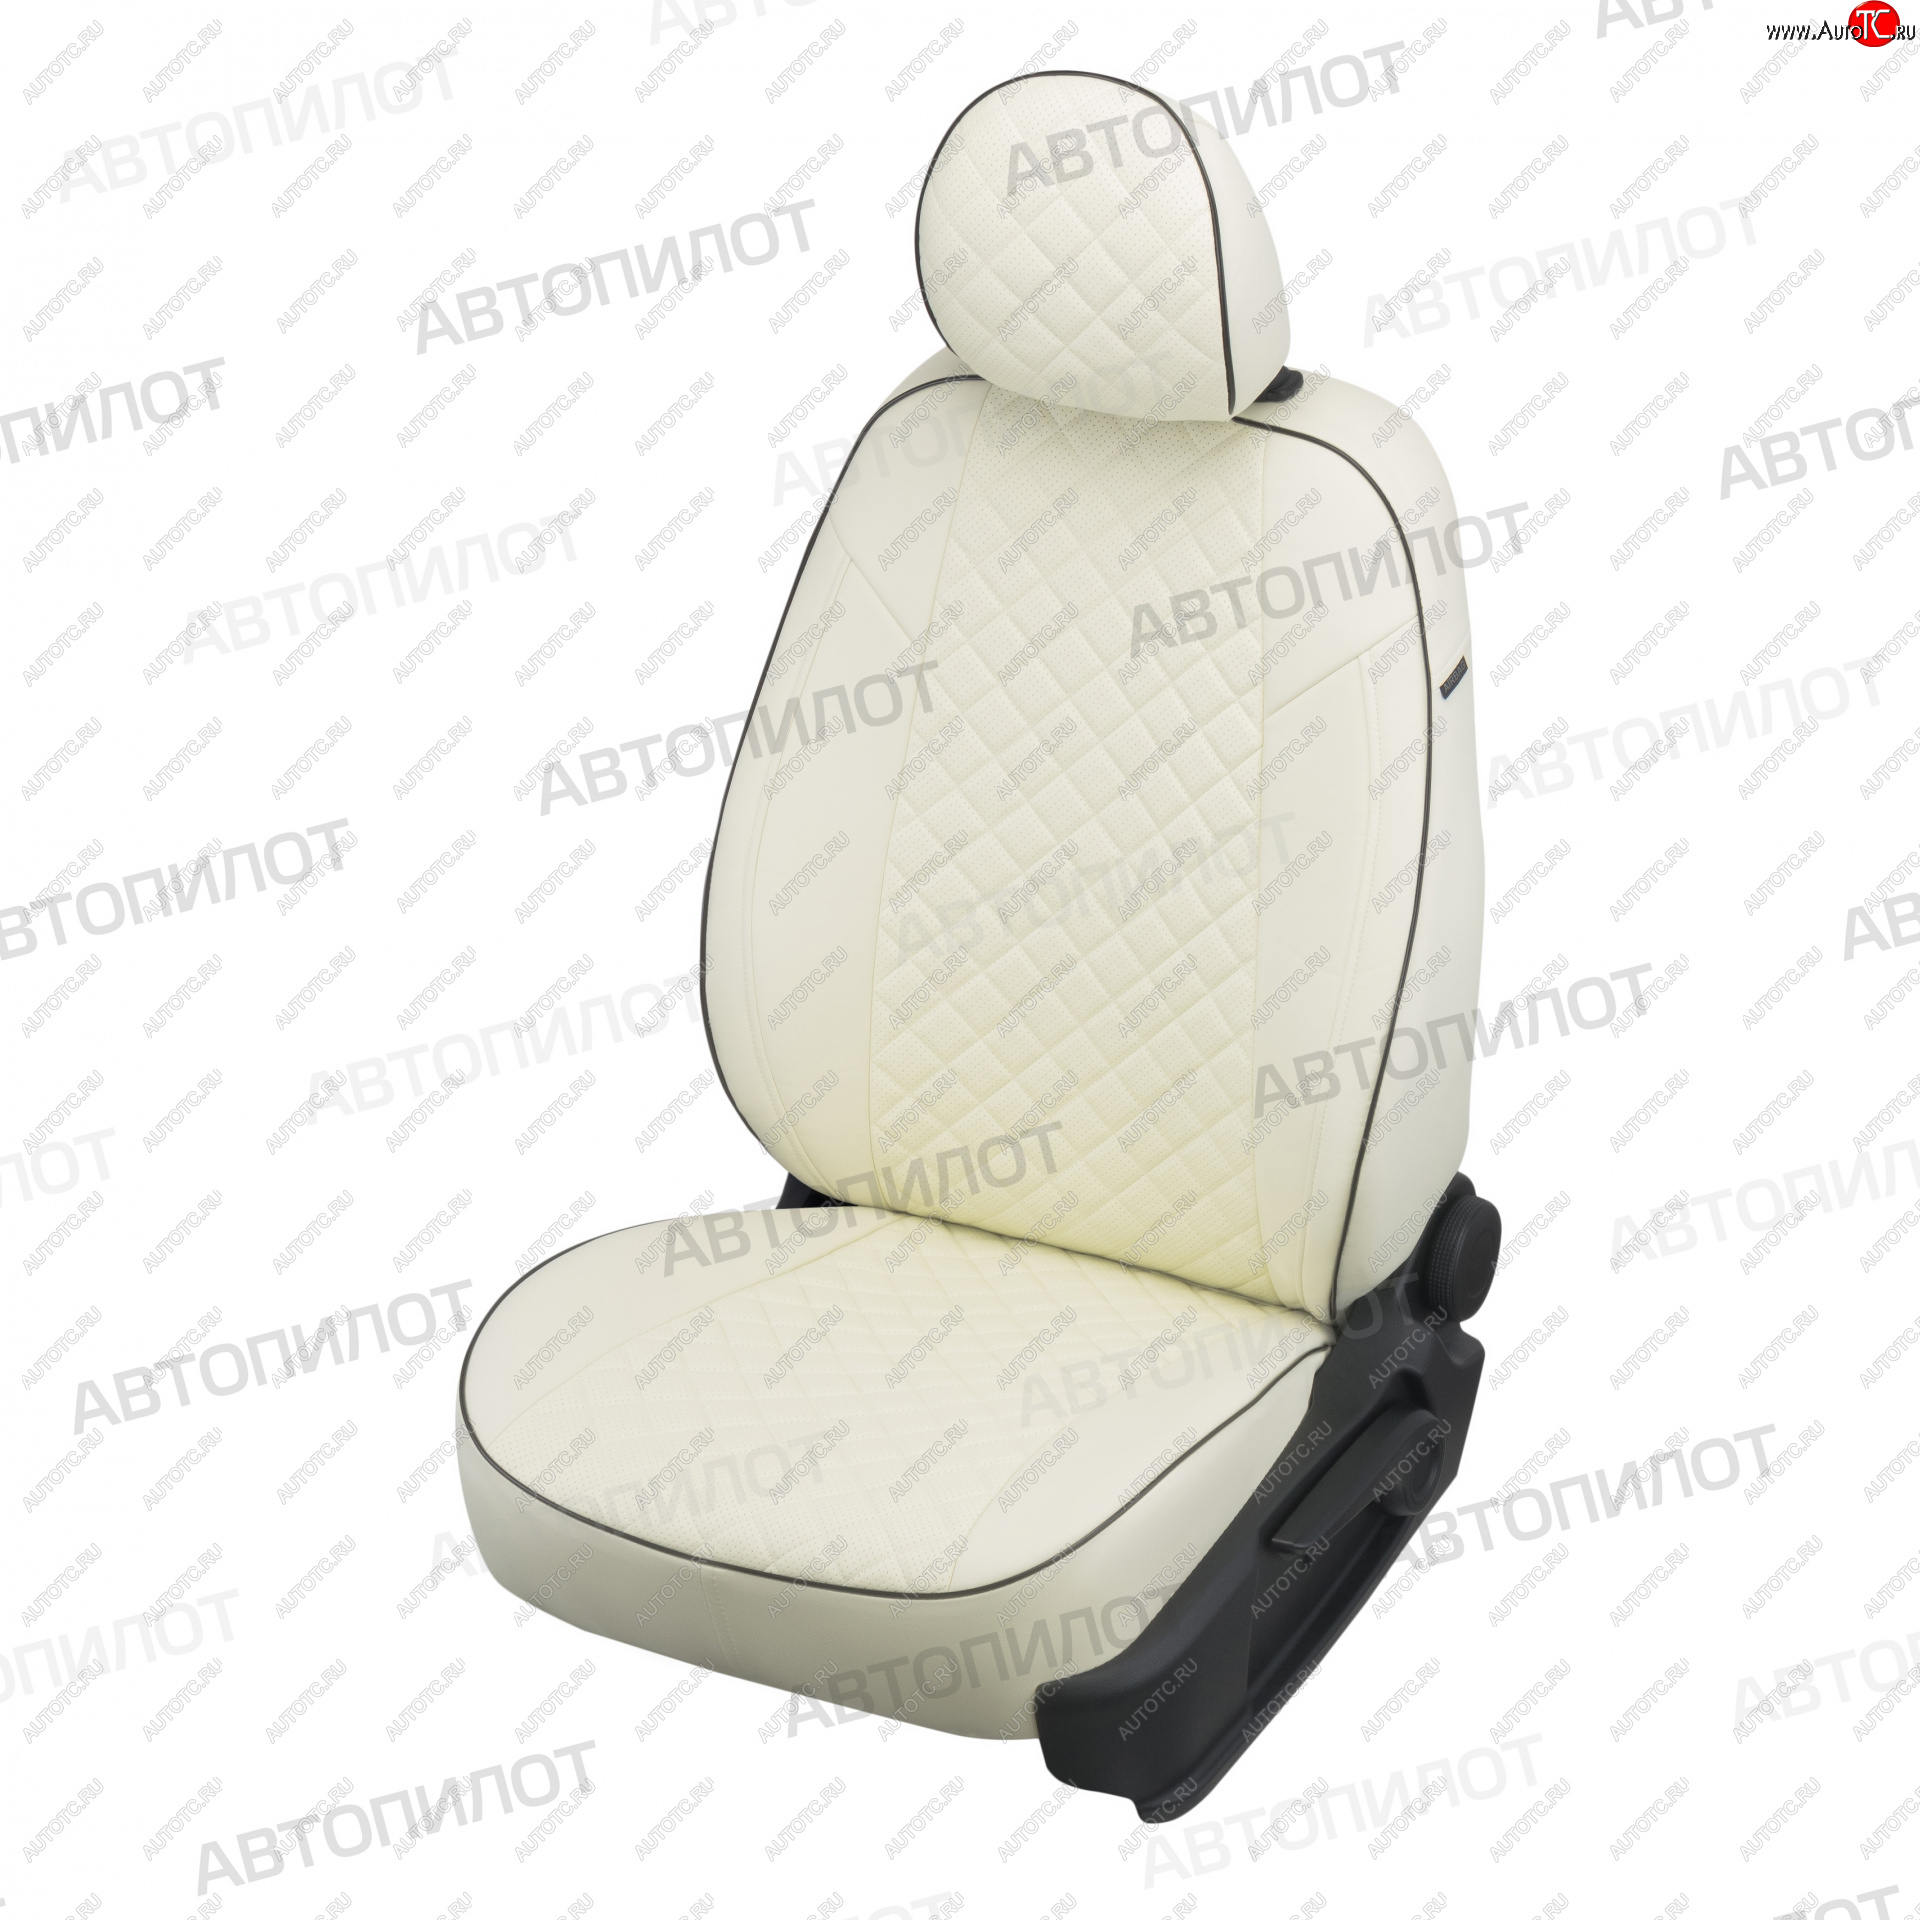 13 999 р. Чехлы сидений (экокожа) Автопилот Ромб  KIA Cerato  2 TD (2008-2013) (белый)